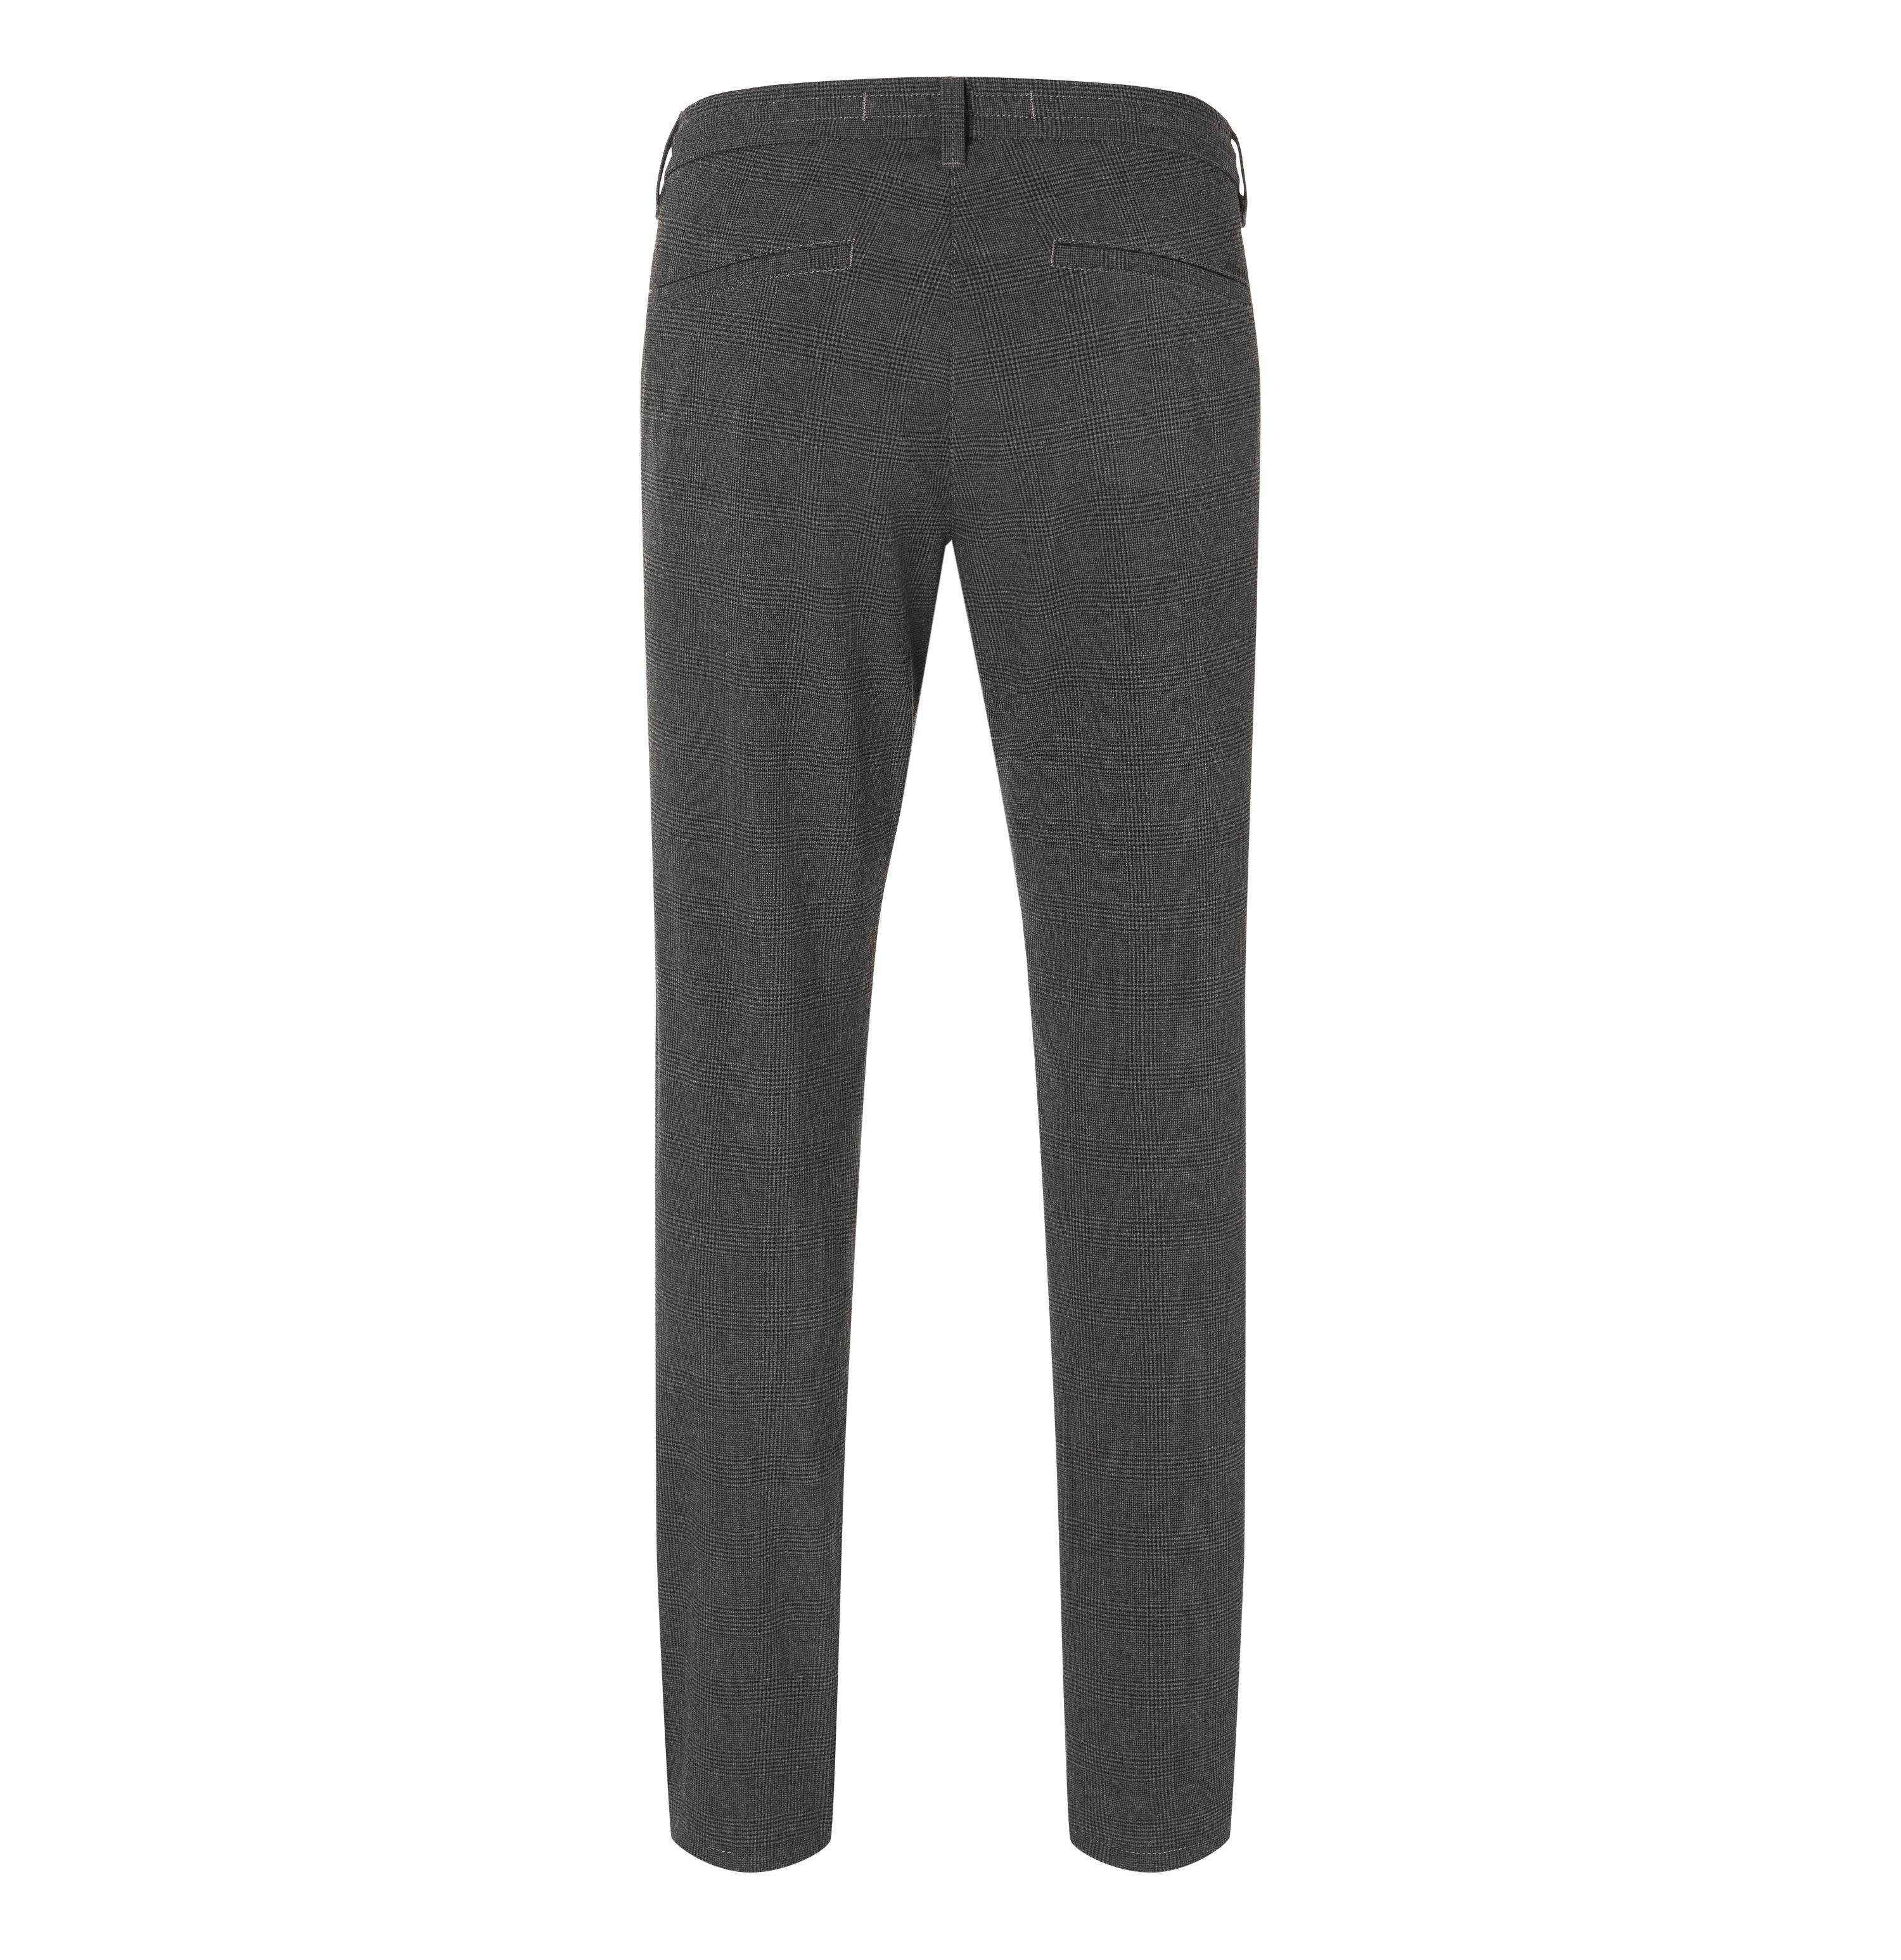 077K 5-Pocket-Jeans grey MAC 6333-00-0703L SPORT LENNOX stone MAC